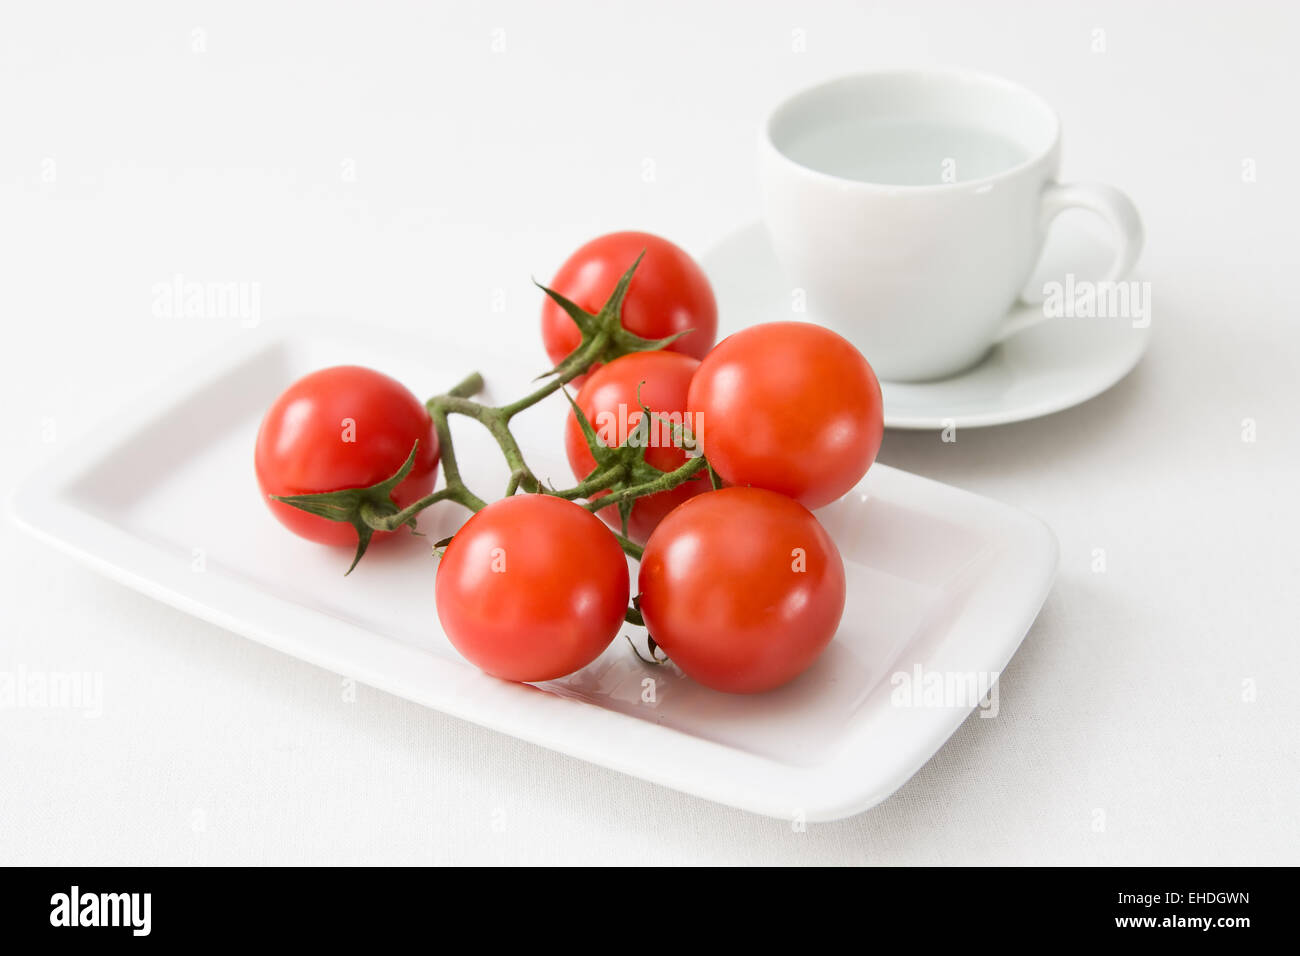 Tomaten und Wasser - Tomatoes and Water Stock Photo